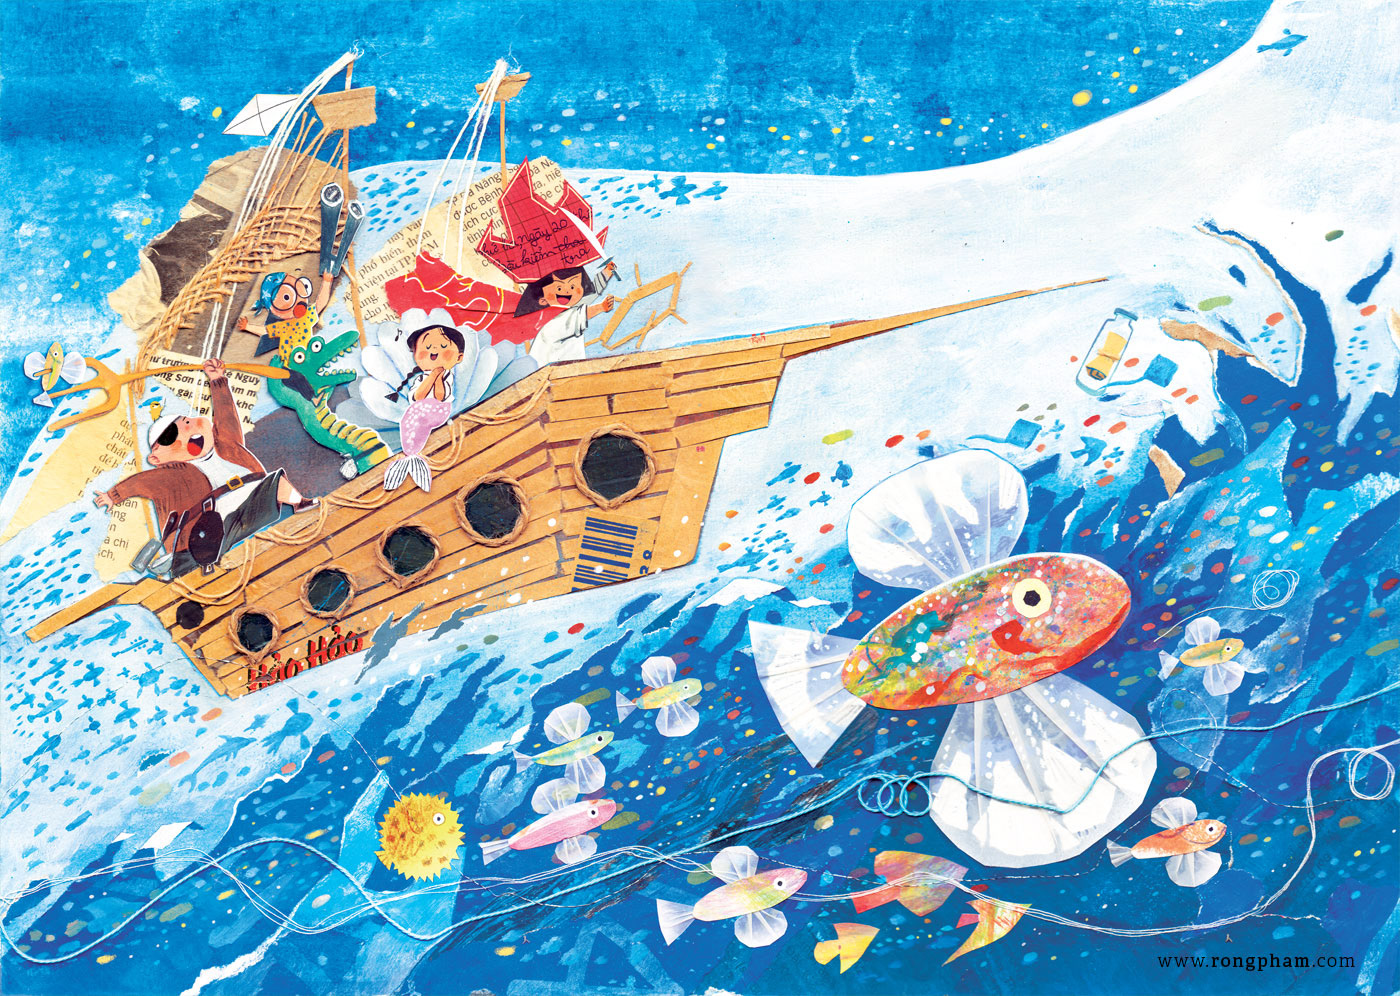 mixed media sea Ocean play pirate voyage wonderland dreamland imagination inspire